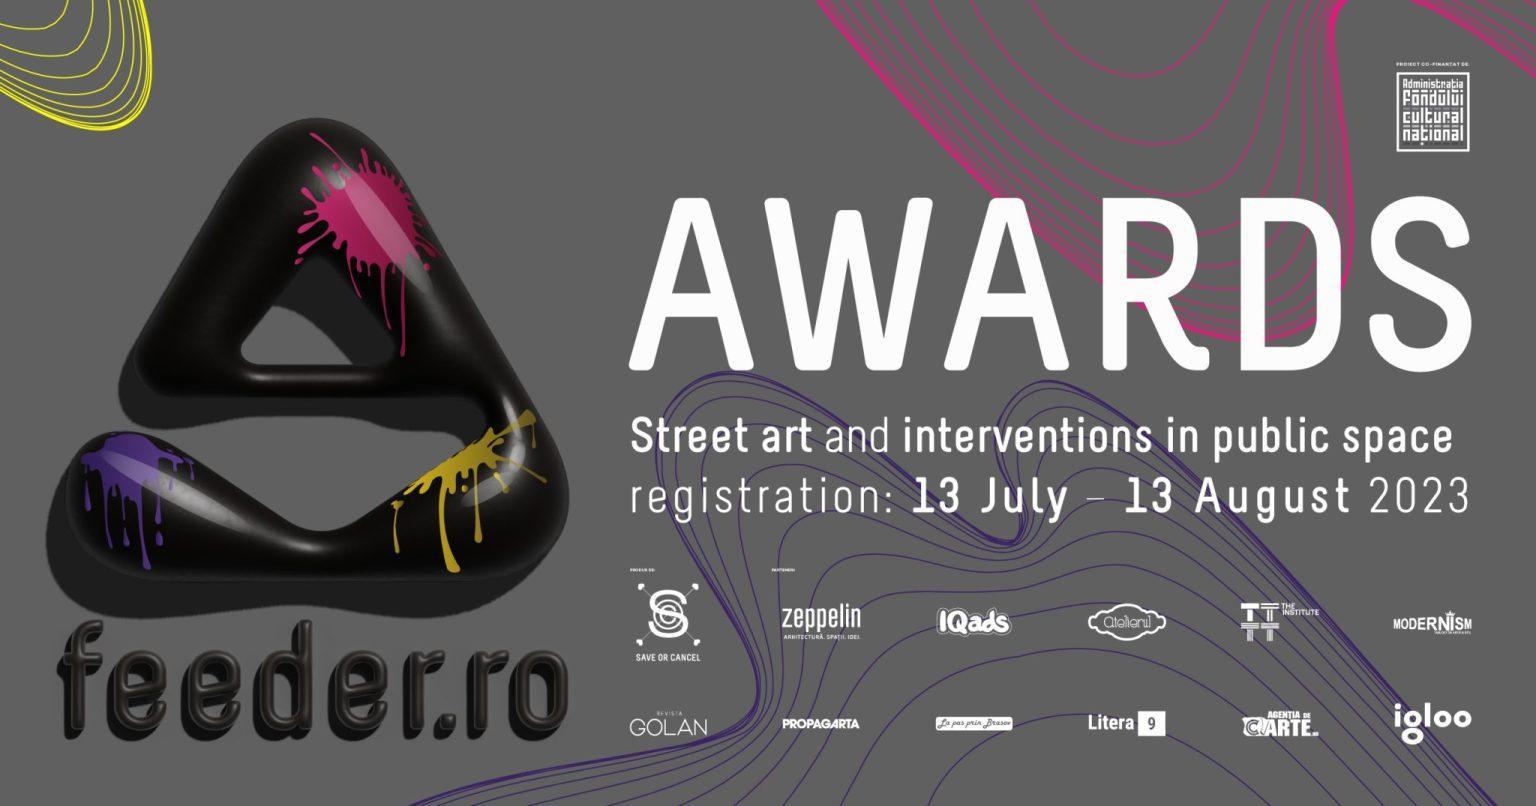 feeder.ro awards open call street art